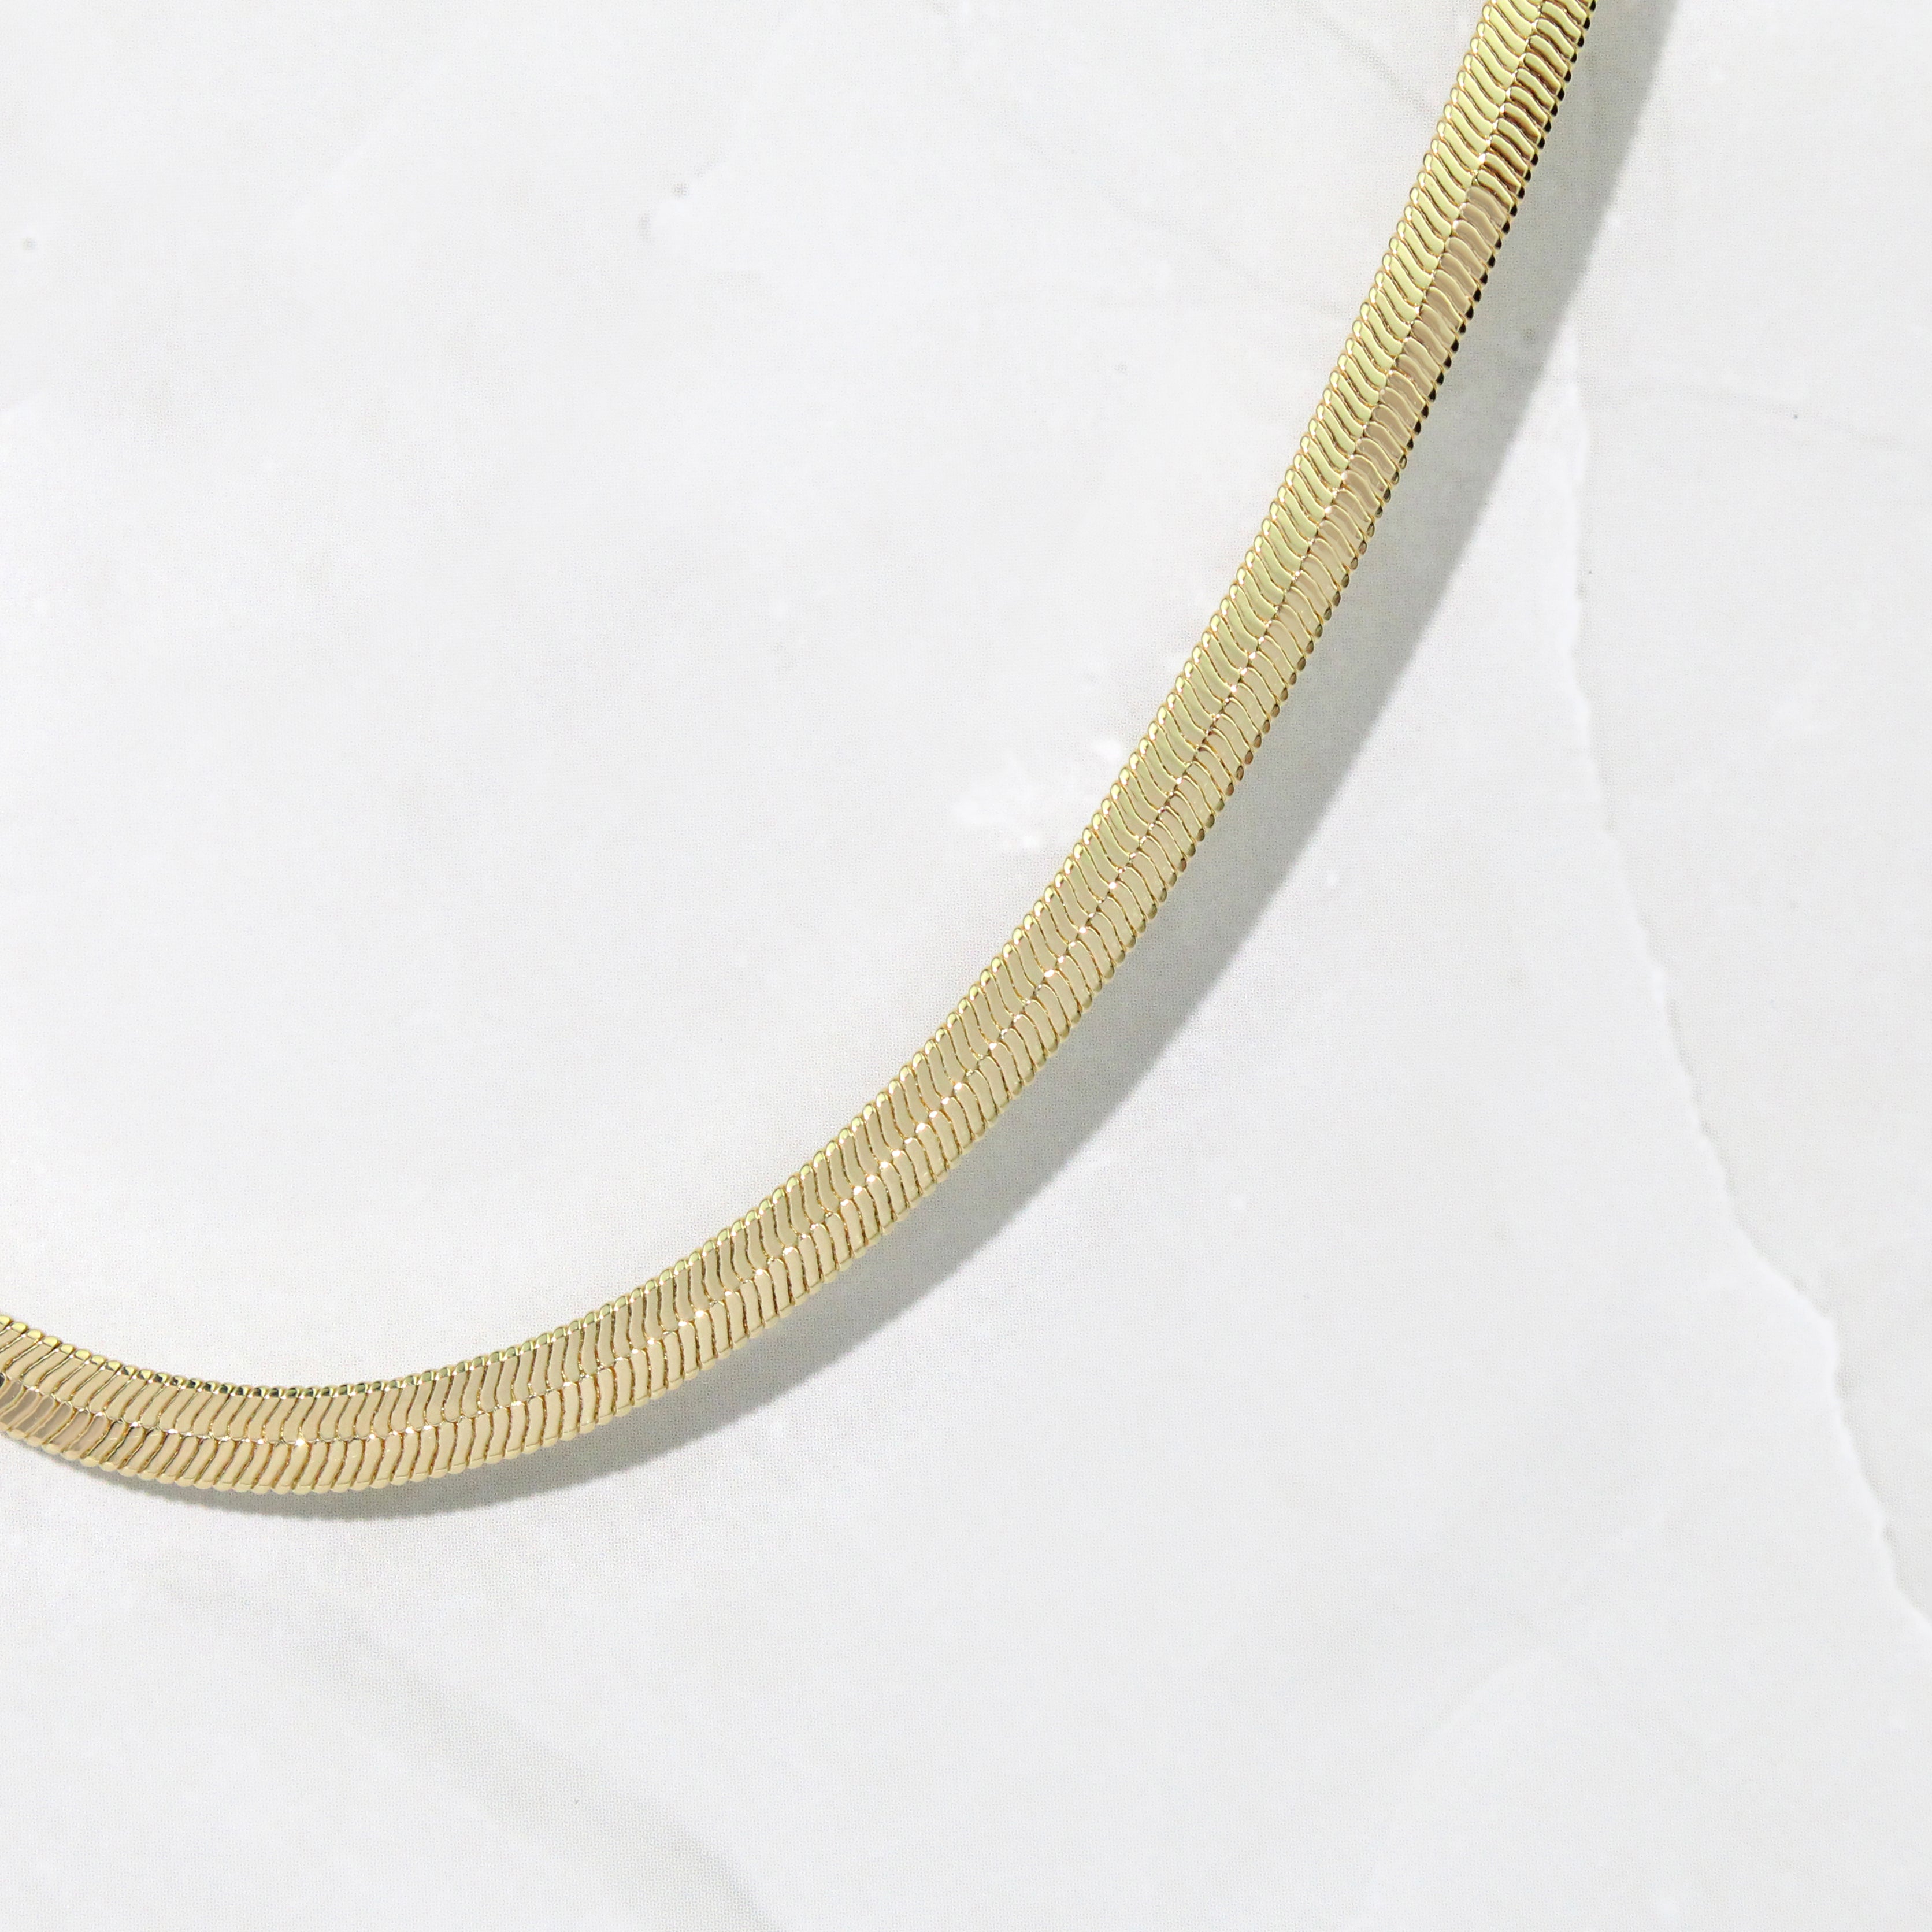 Genuine 18K Yellow Gold Filled HypoAllergenic 2mm Herringbone Chain Necklace  N14 | eBay